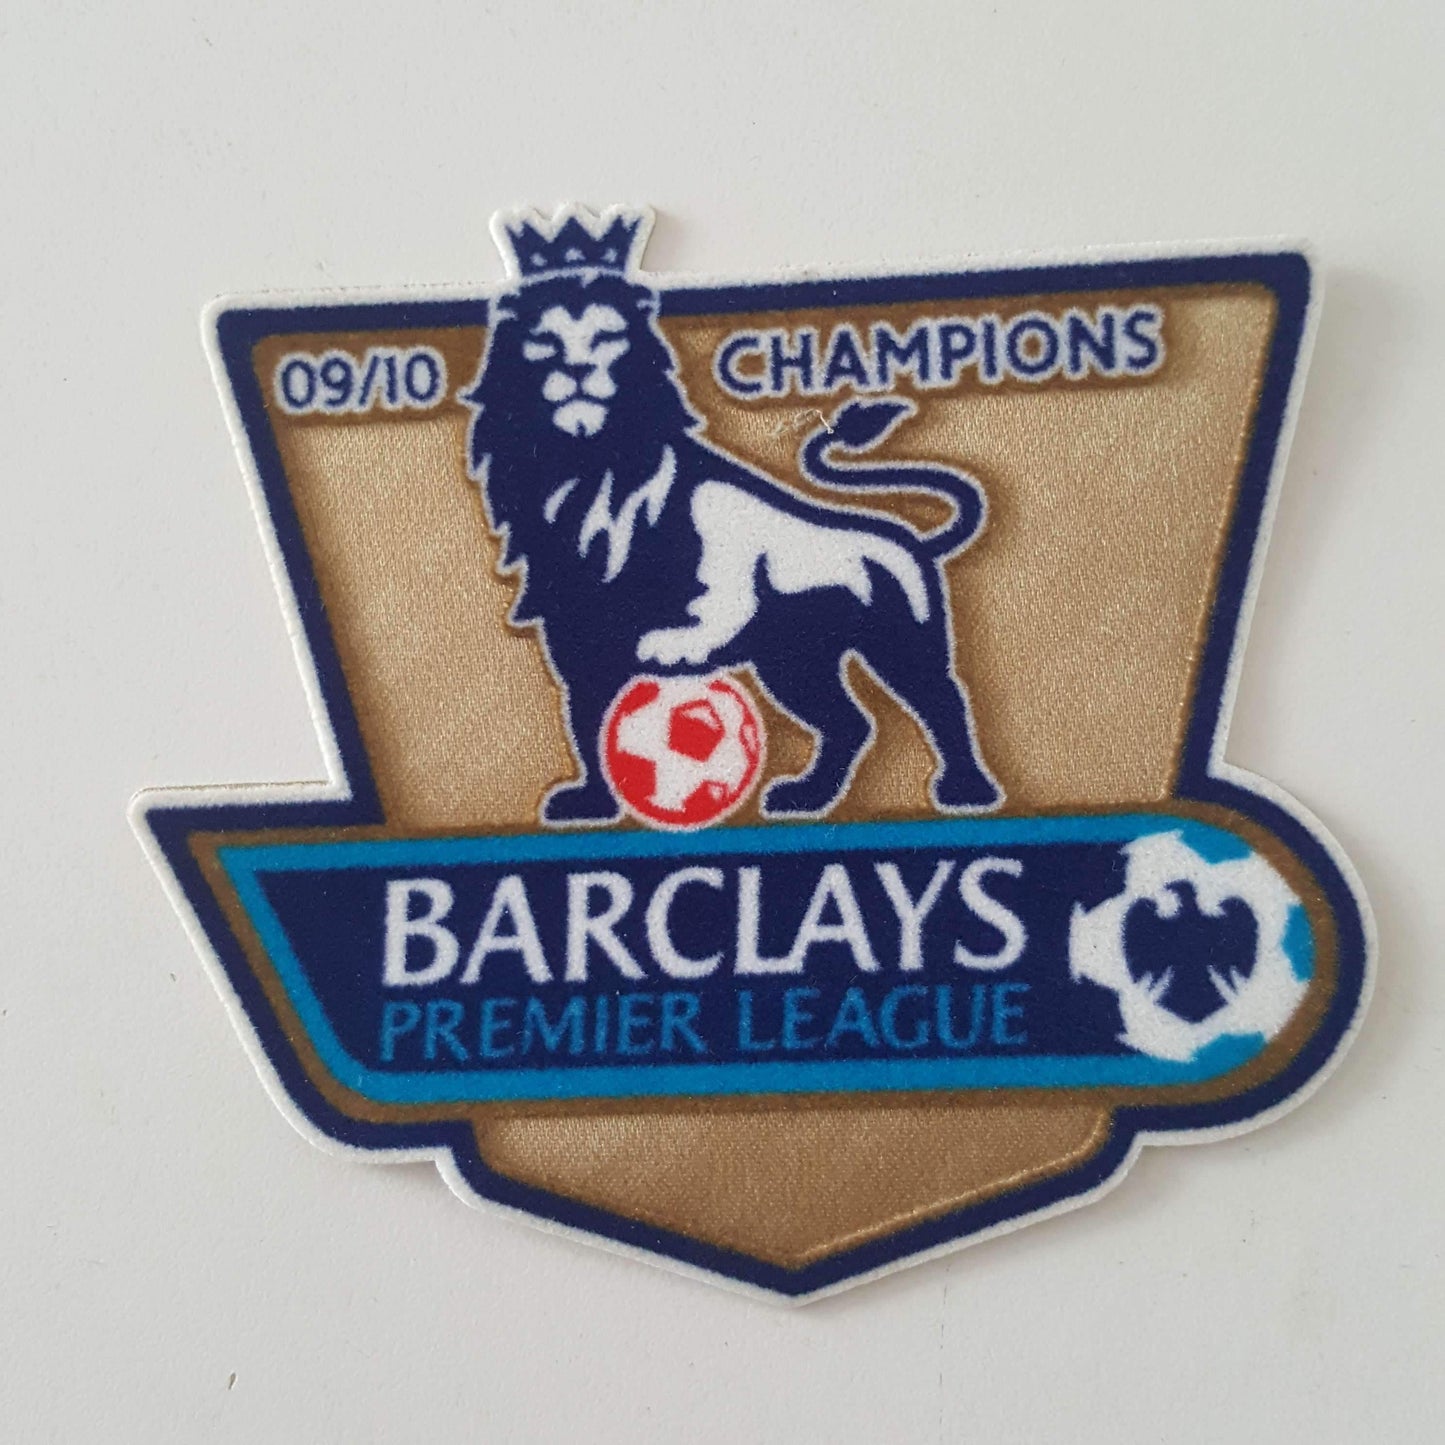 2009/10 Barclays Premier League Champions Patch - ClassicFootballJersey